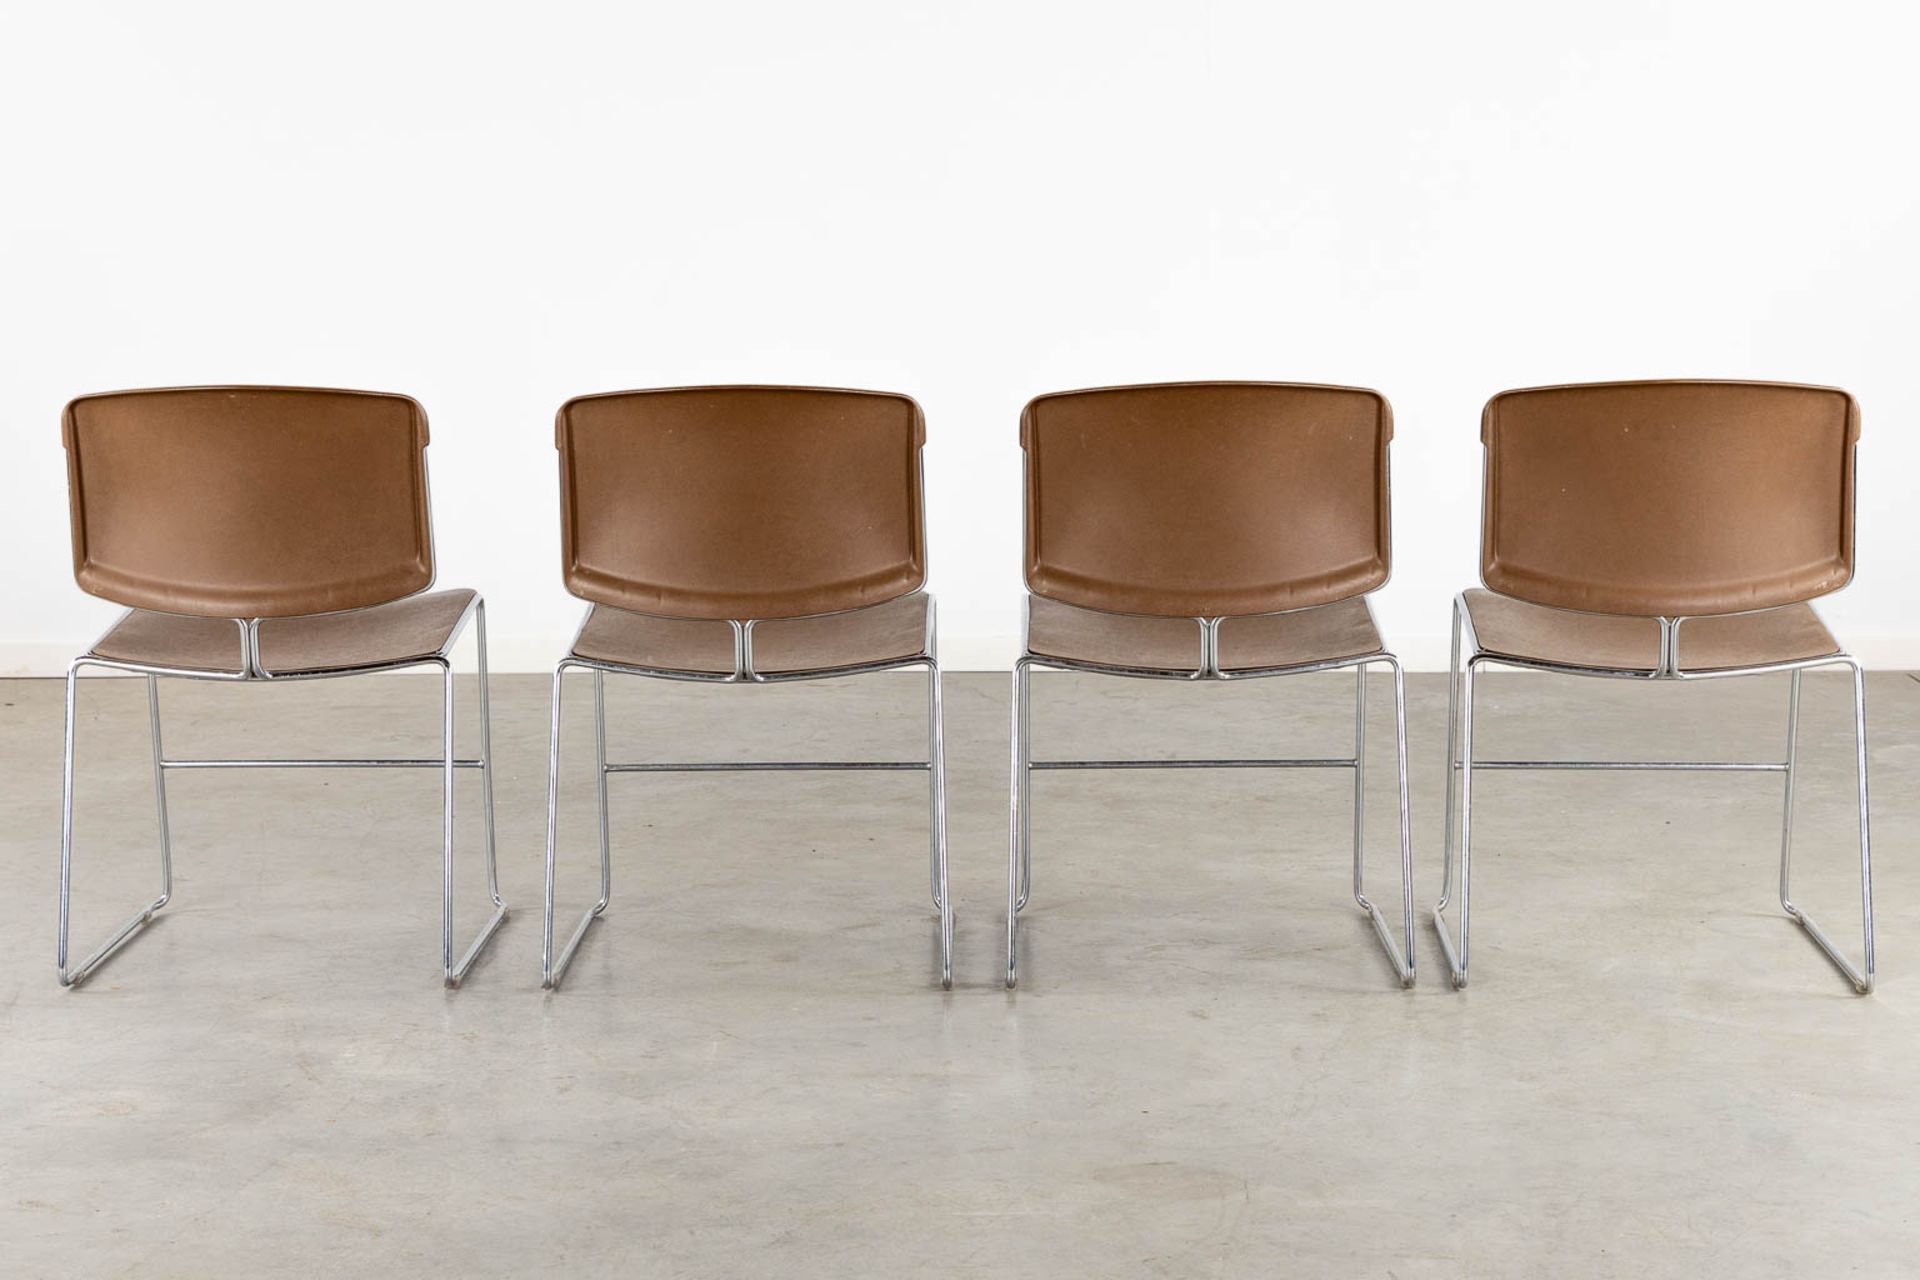 A set of 4 mid-century chairs 'Steelcase Max Stacker' chairs. (L:52 x W:50 x H:78 cm) - Bild 5 aus 14